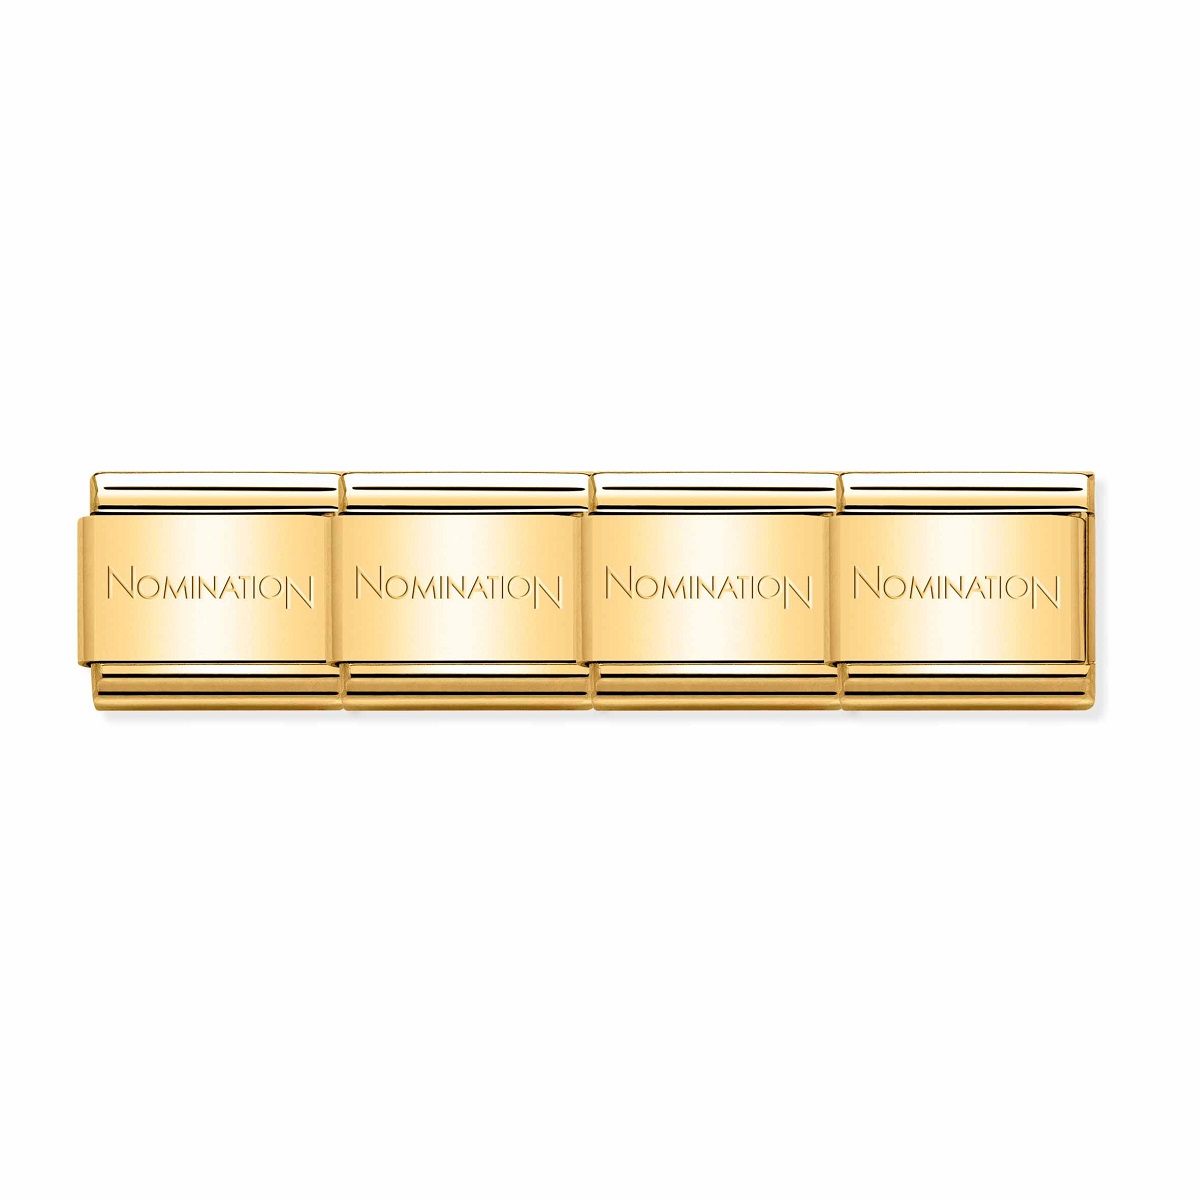 Nomination Classic Gold Stainless Steel Starter Bracelet